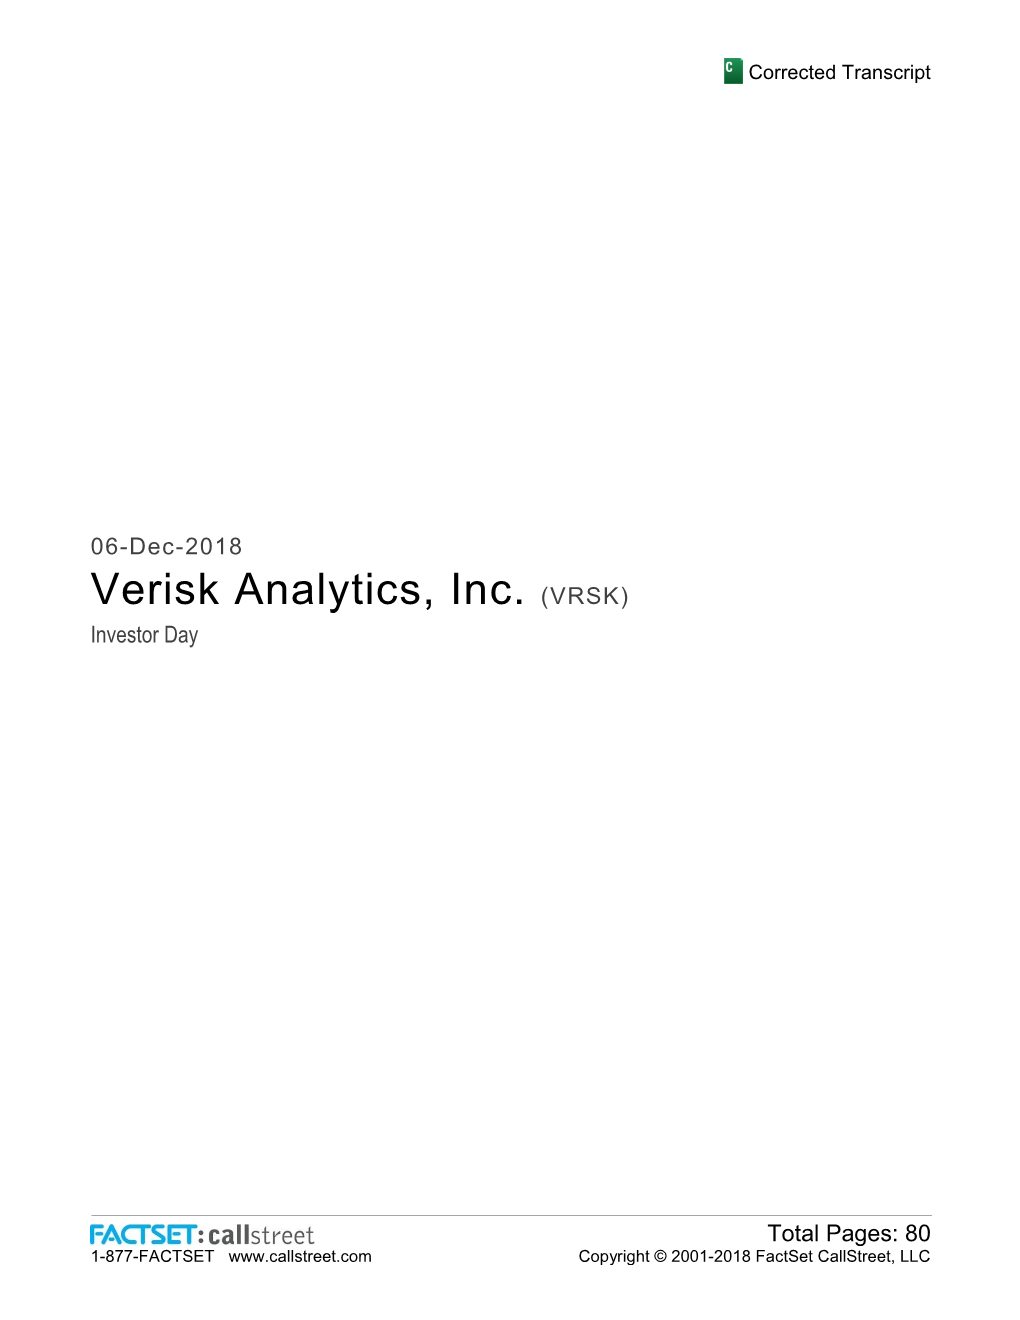 Verisk Analytics, Inc. (VRSK) Investor Day